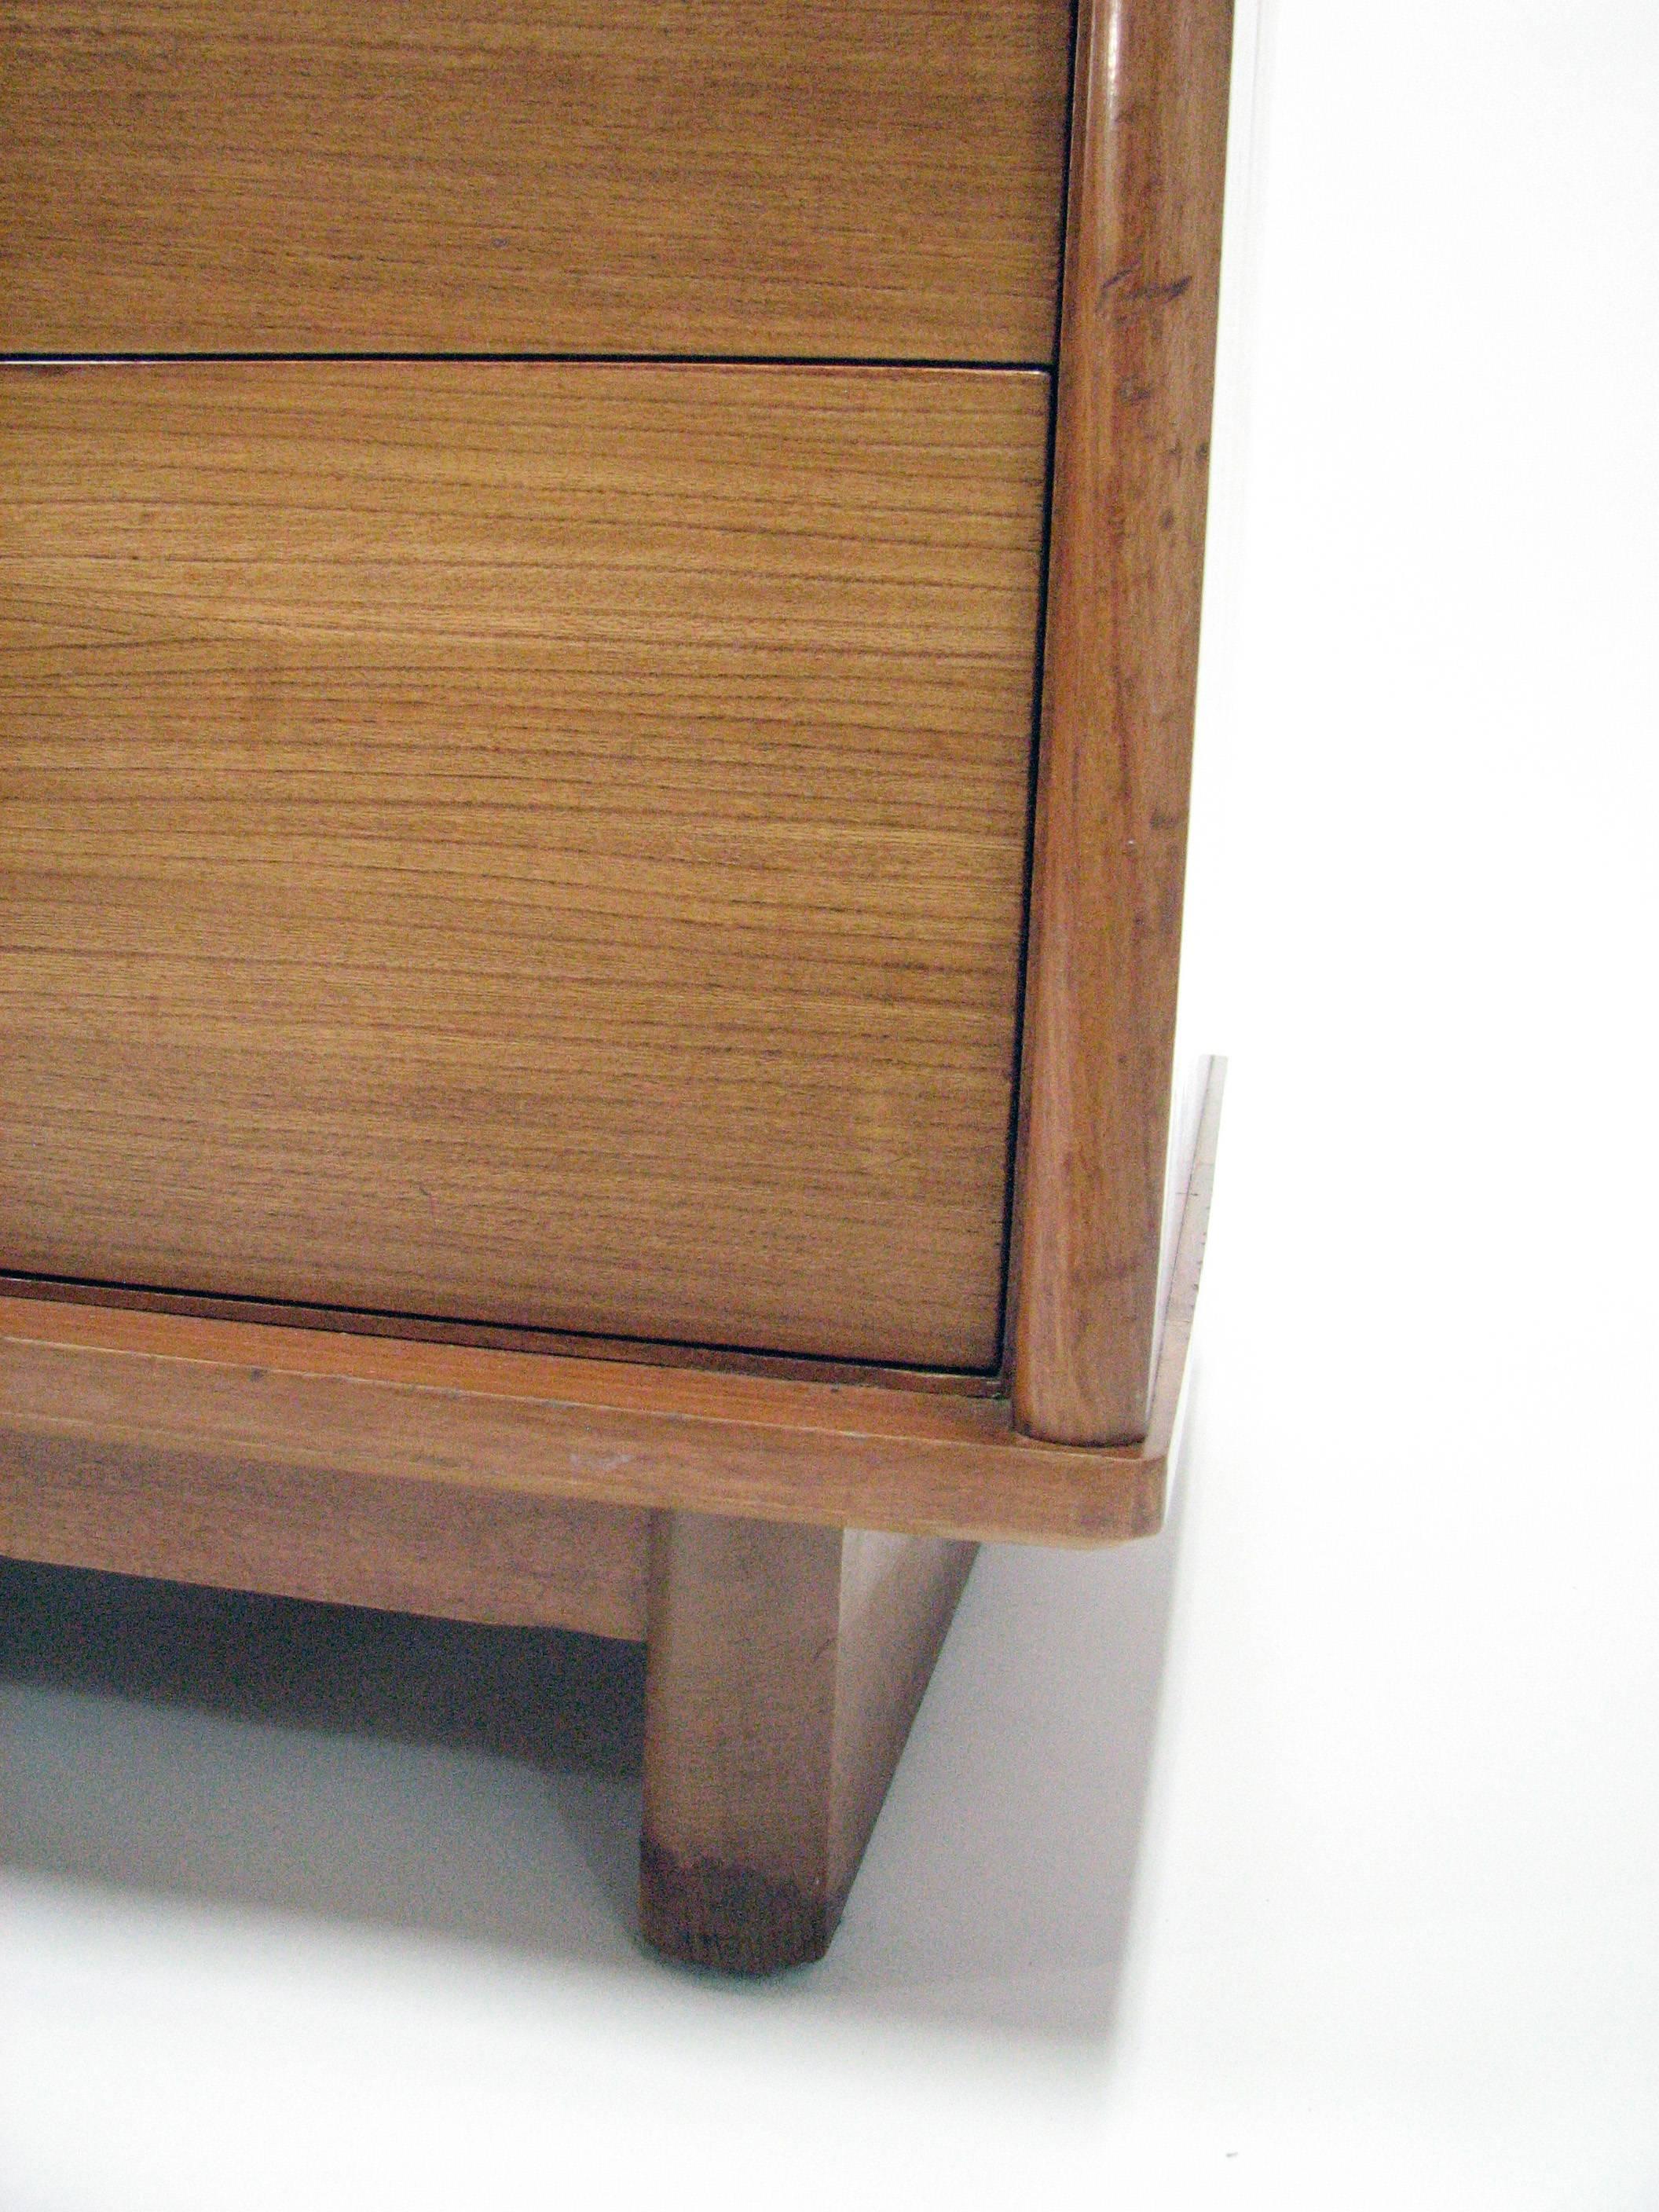 Timeless Mid-Century Modern Dresser by Milo Baughman for Drexel “Today’s Living” 3